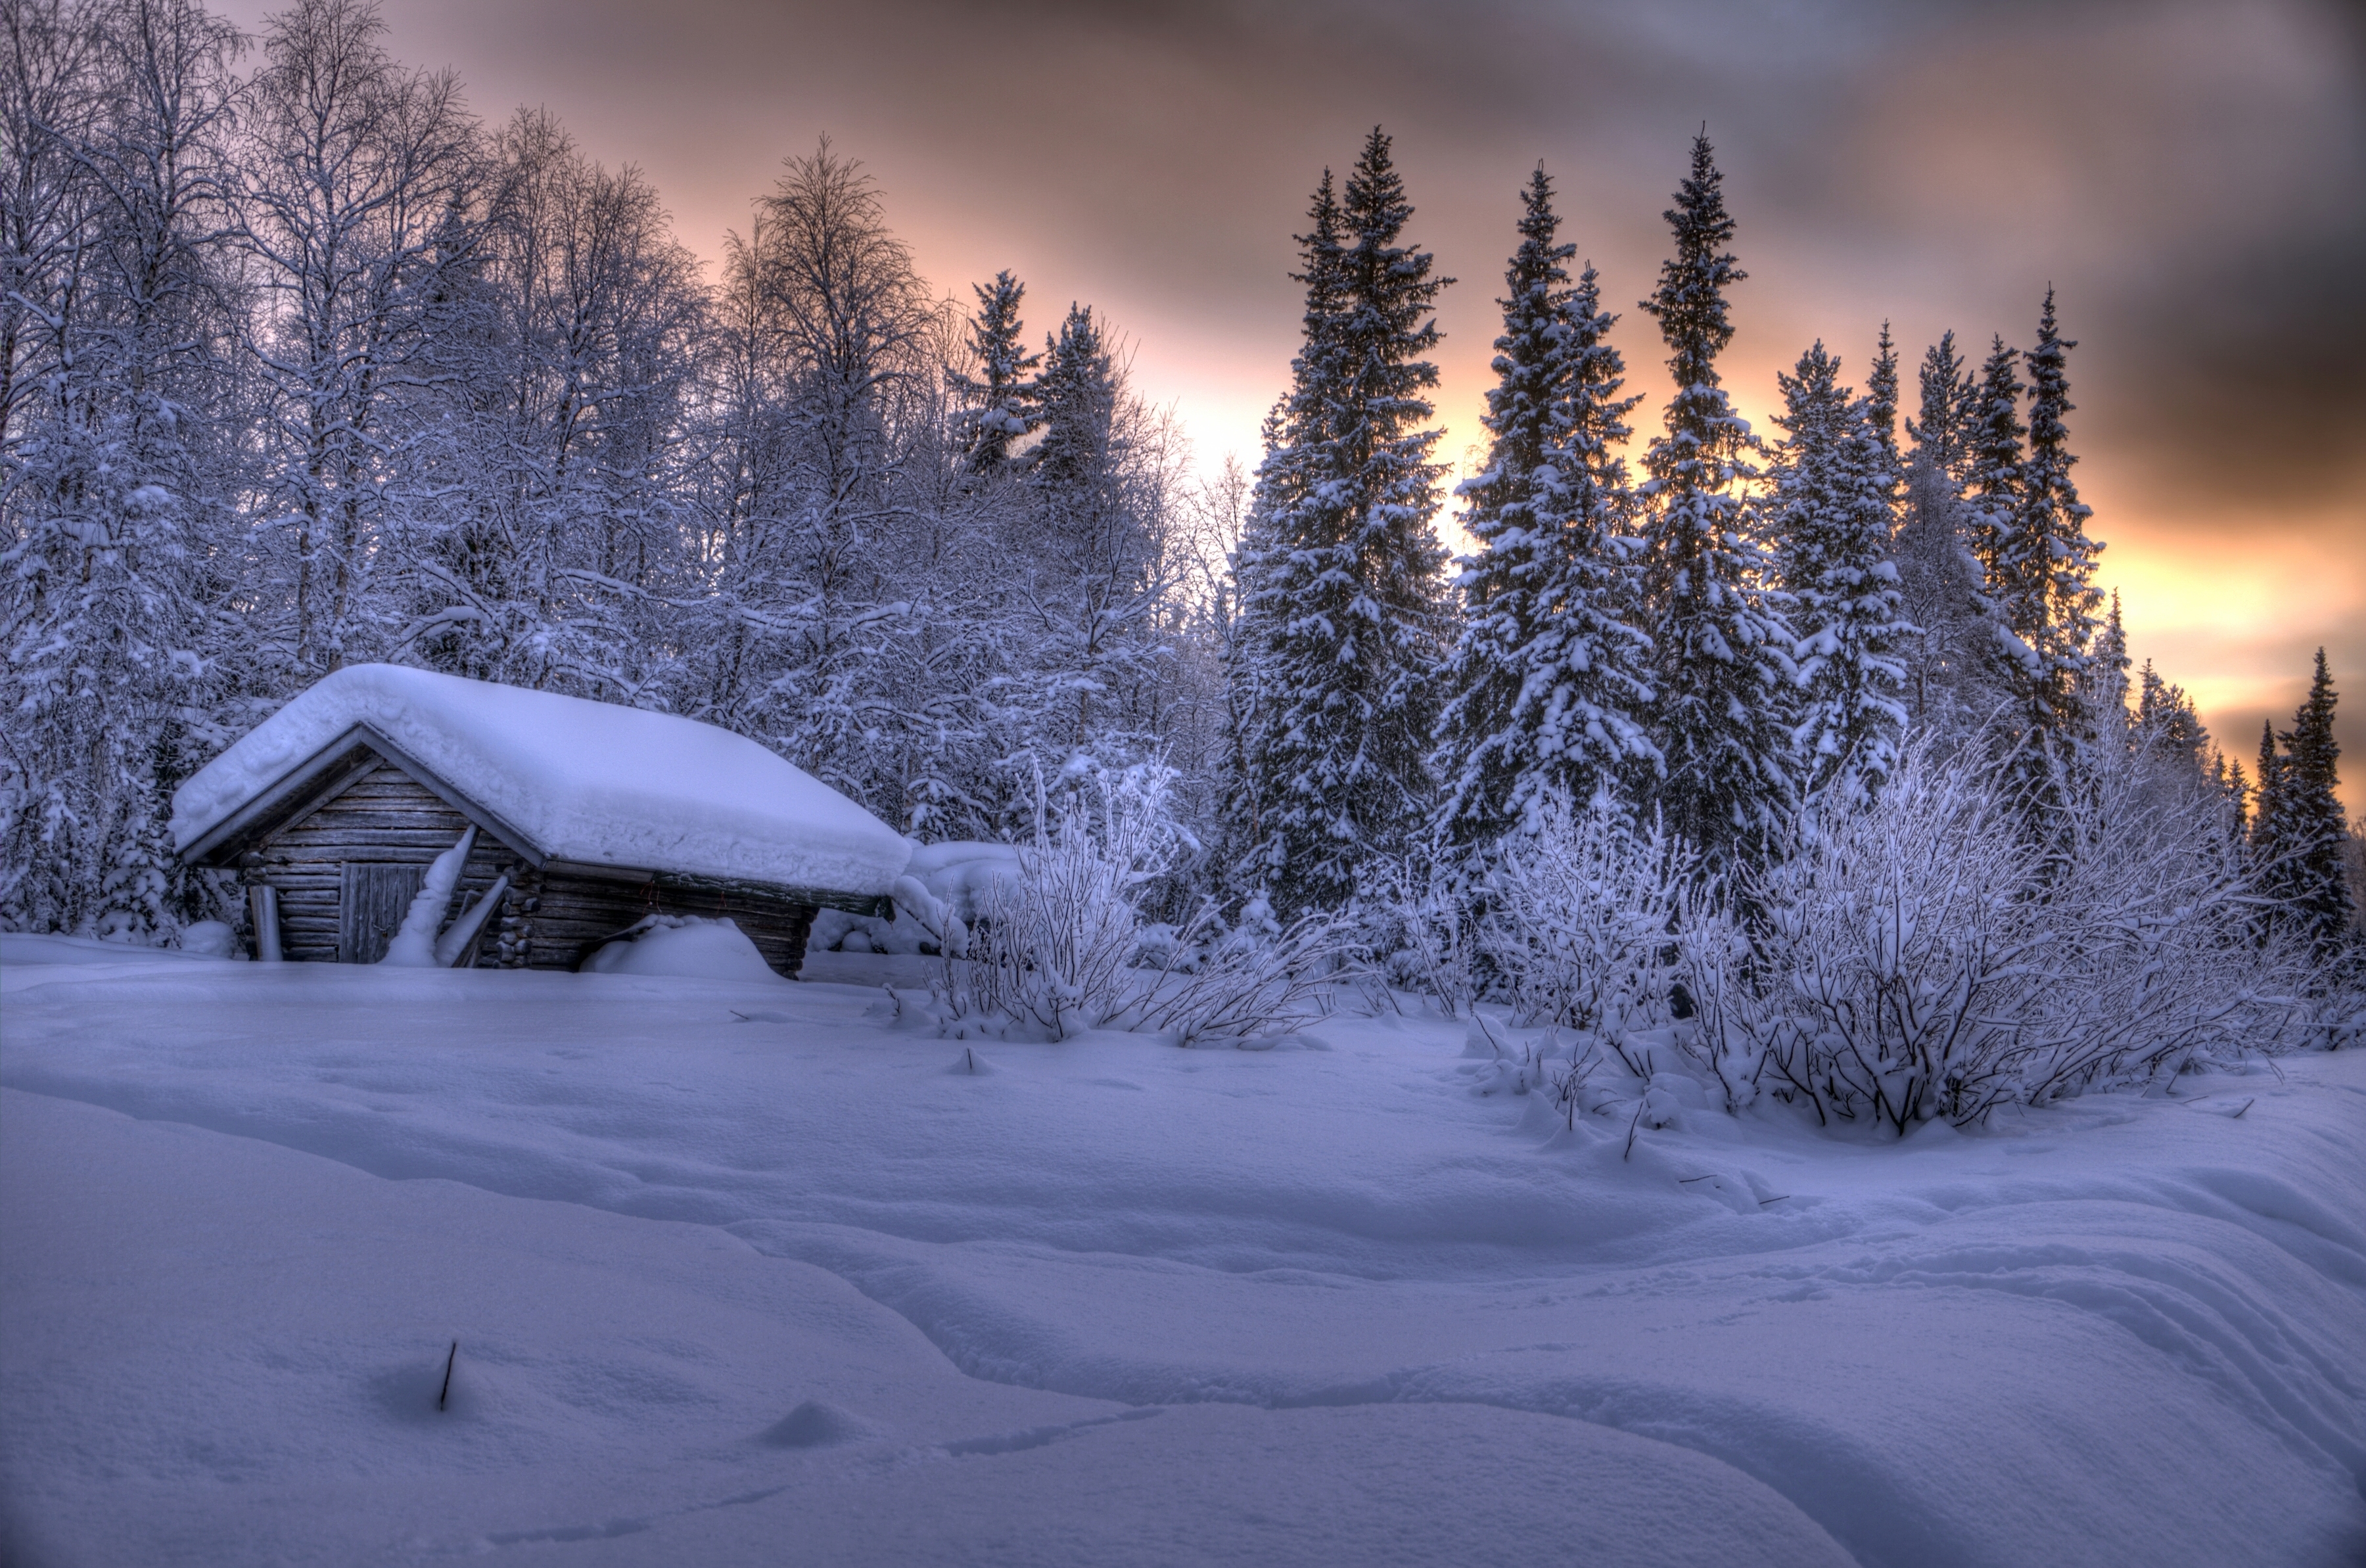 Winter forest. Финляндия зимняя избушка. Зима в лесу. Избушка в лесу зимой. Домик в зимнем лесу.